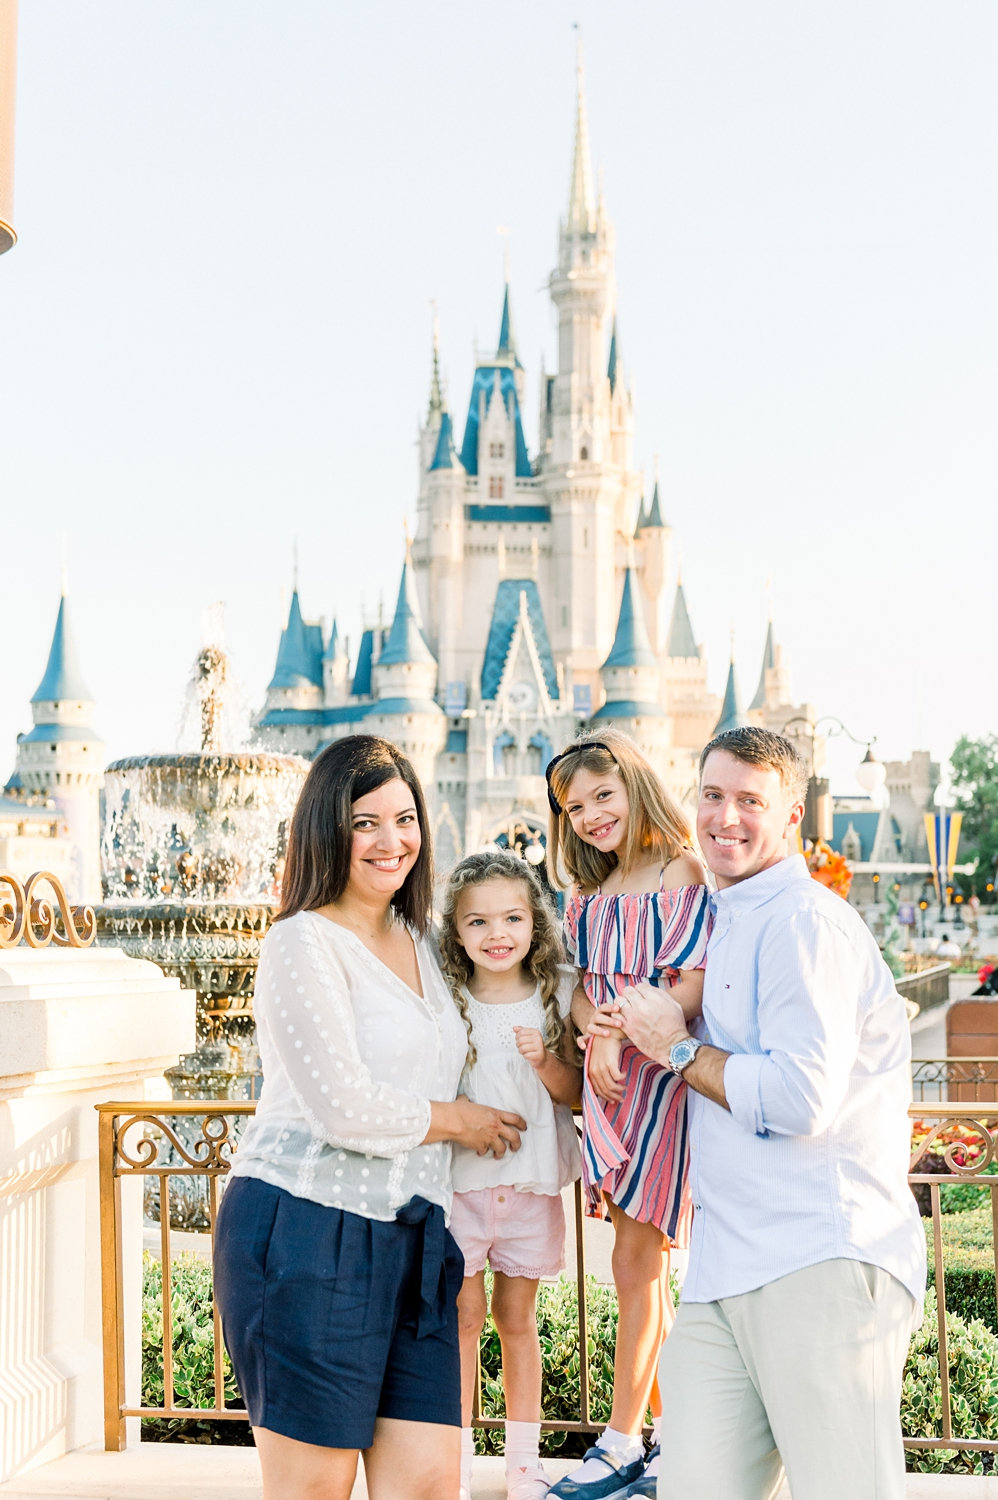 Cinderella Castle, Magic Kingdom, Disney World, family photo in front of Cinderella Castle